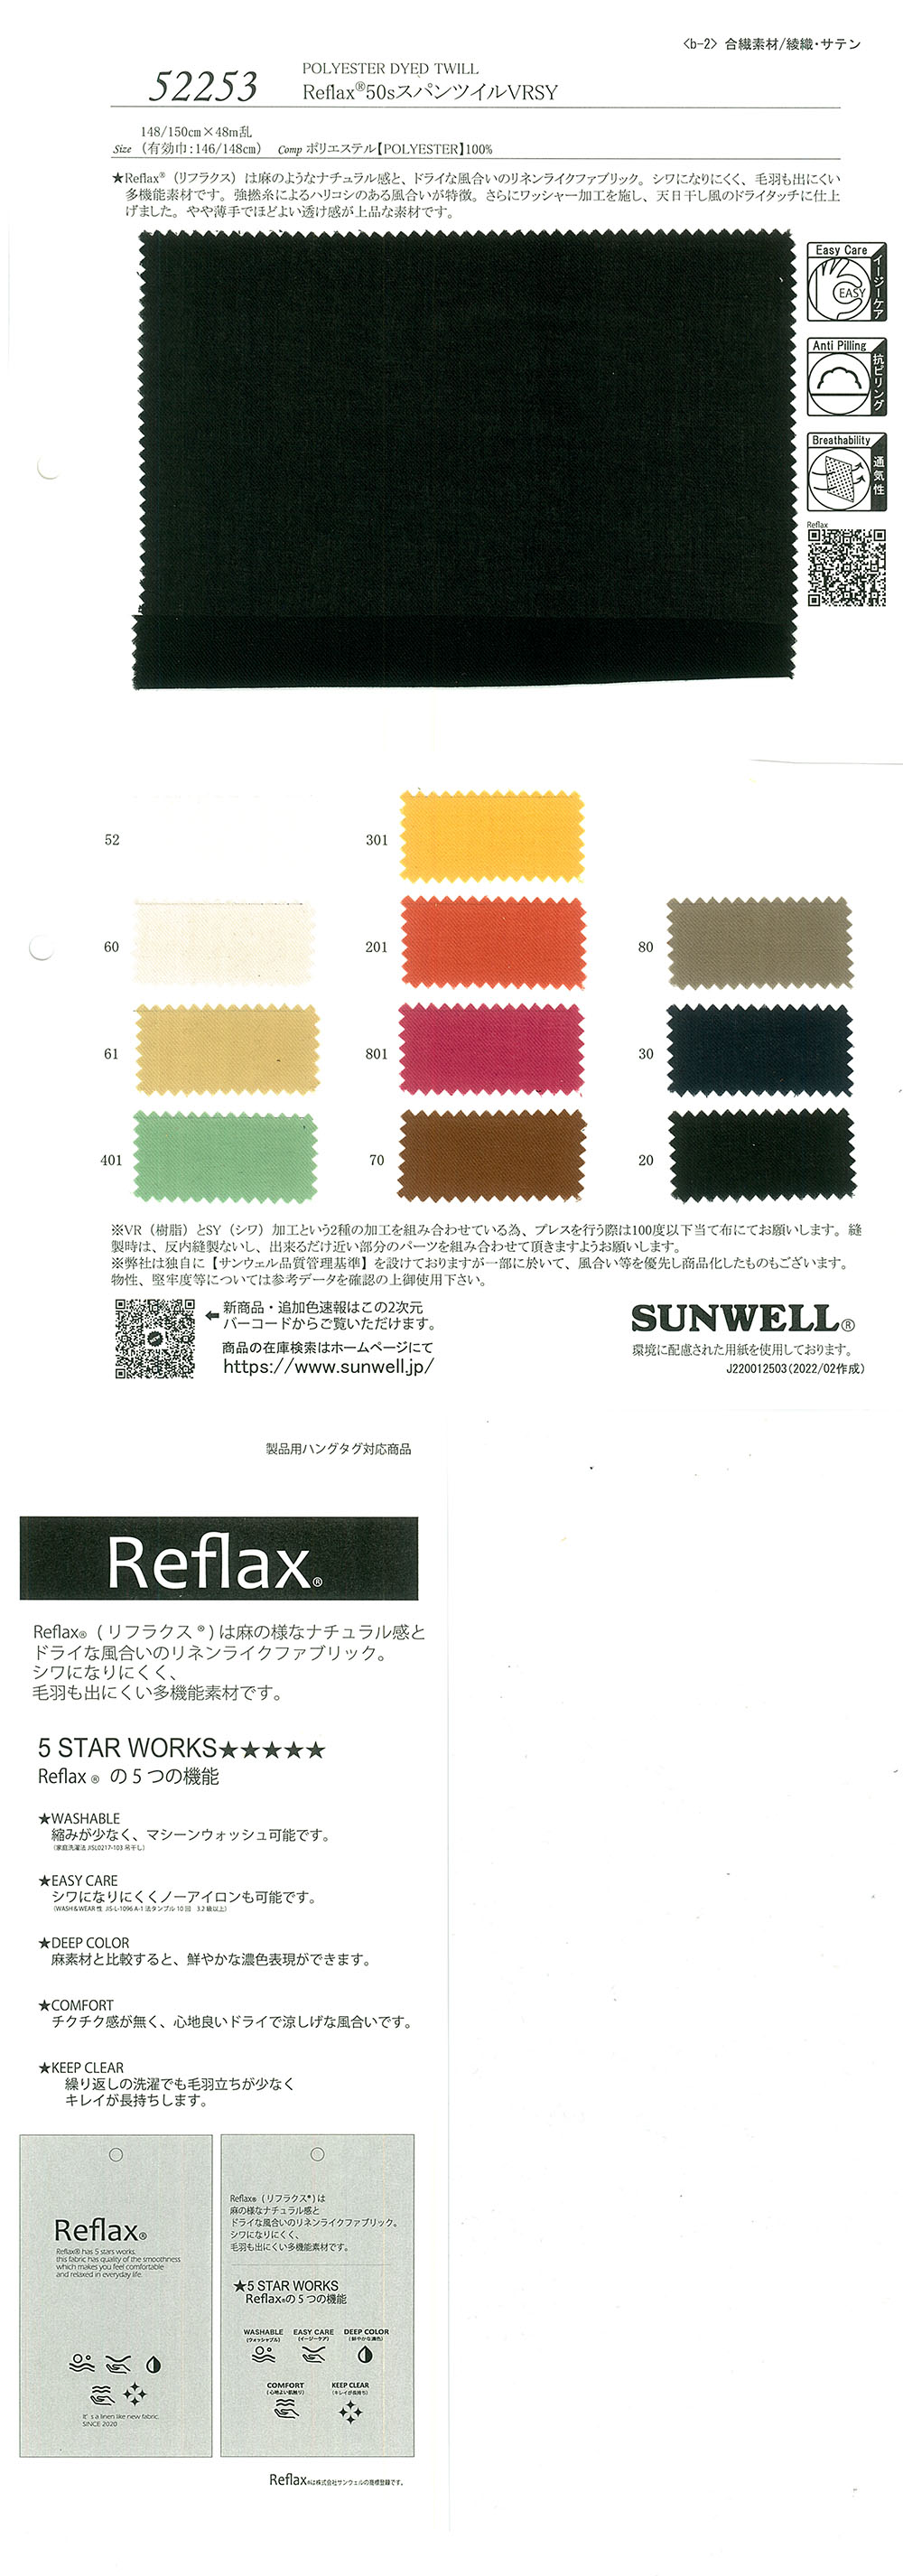 52253 Reflax(R)50 单纱瓷砖线[面料] SUNWELL